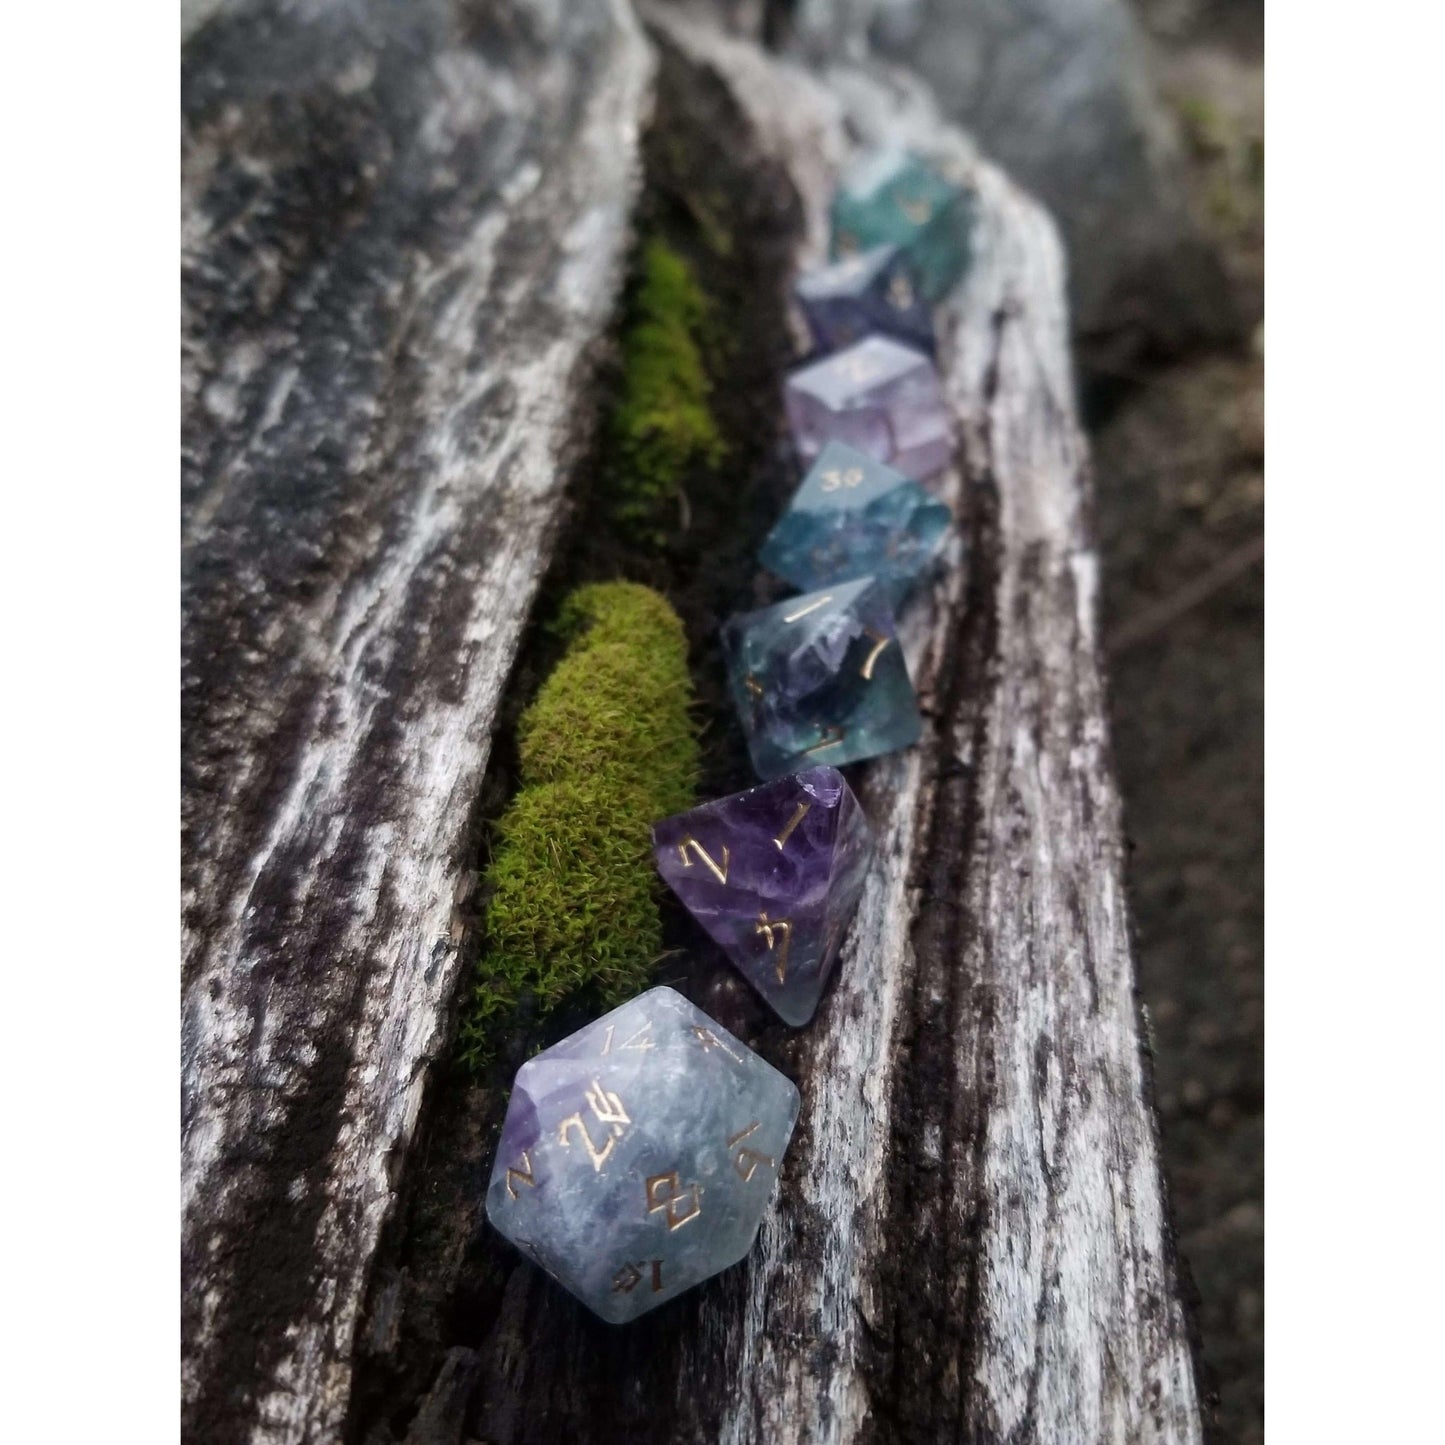 Juego de dados de piedra de fluorita púrpura